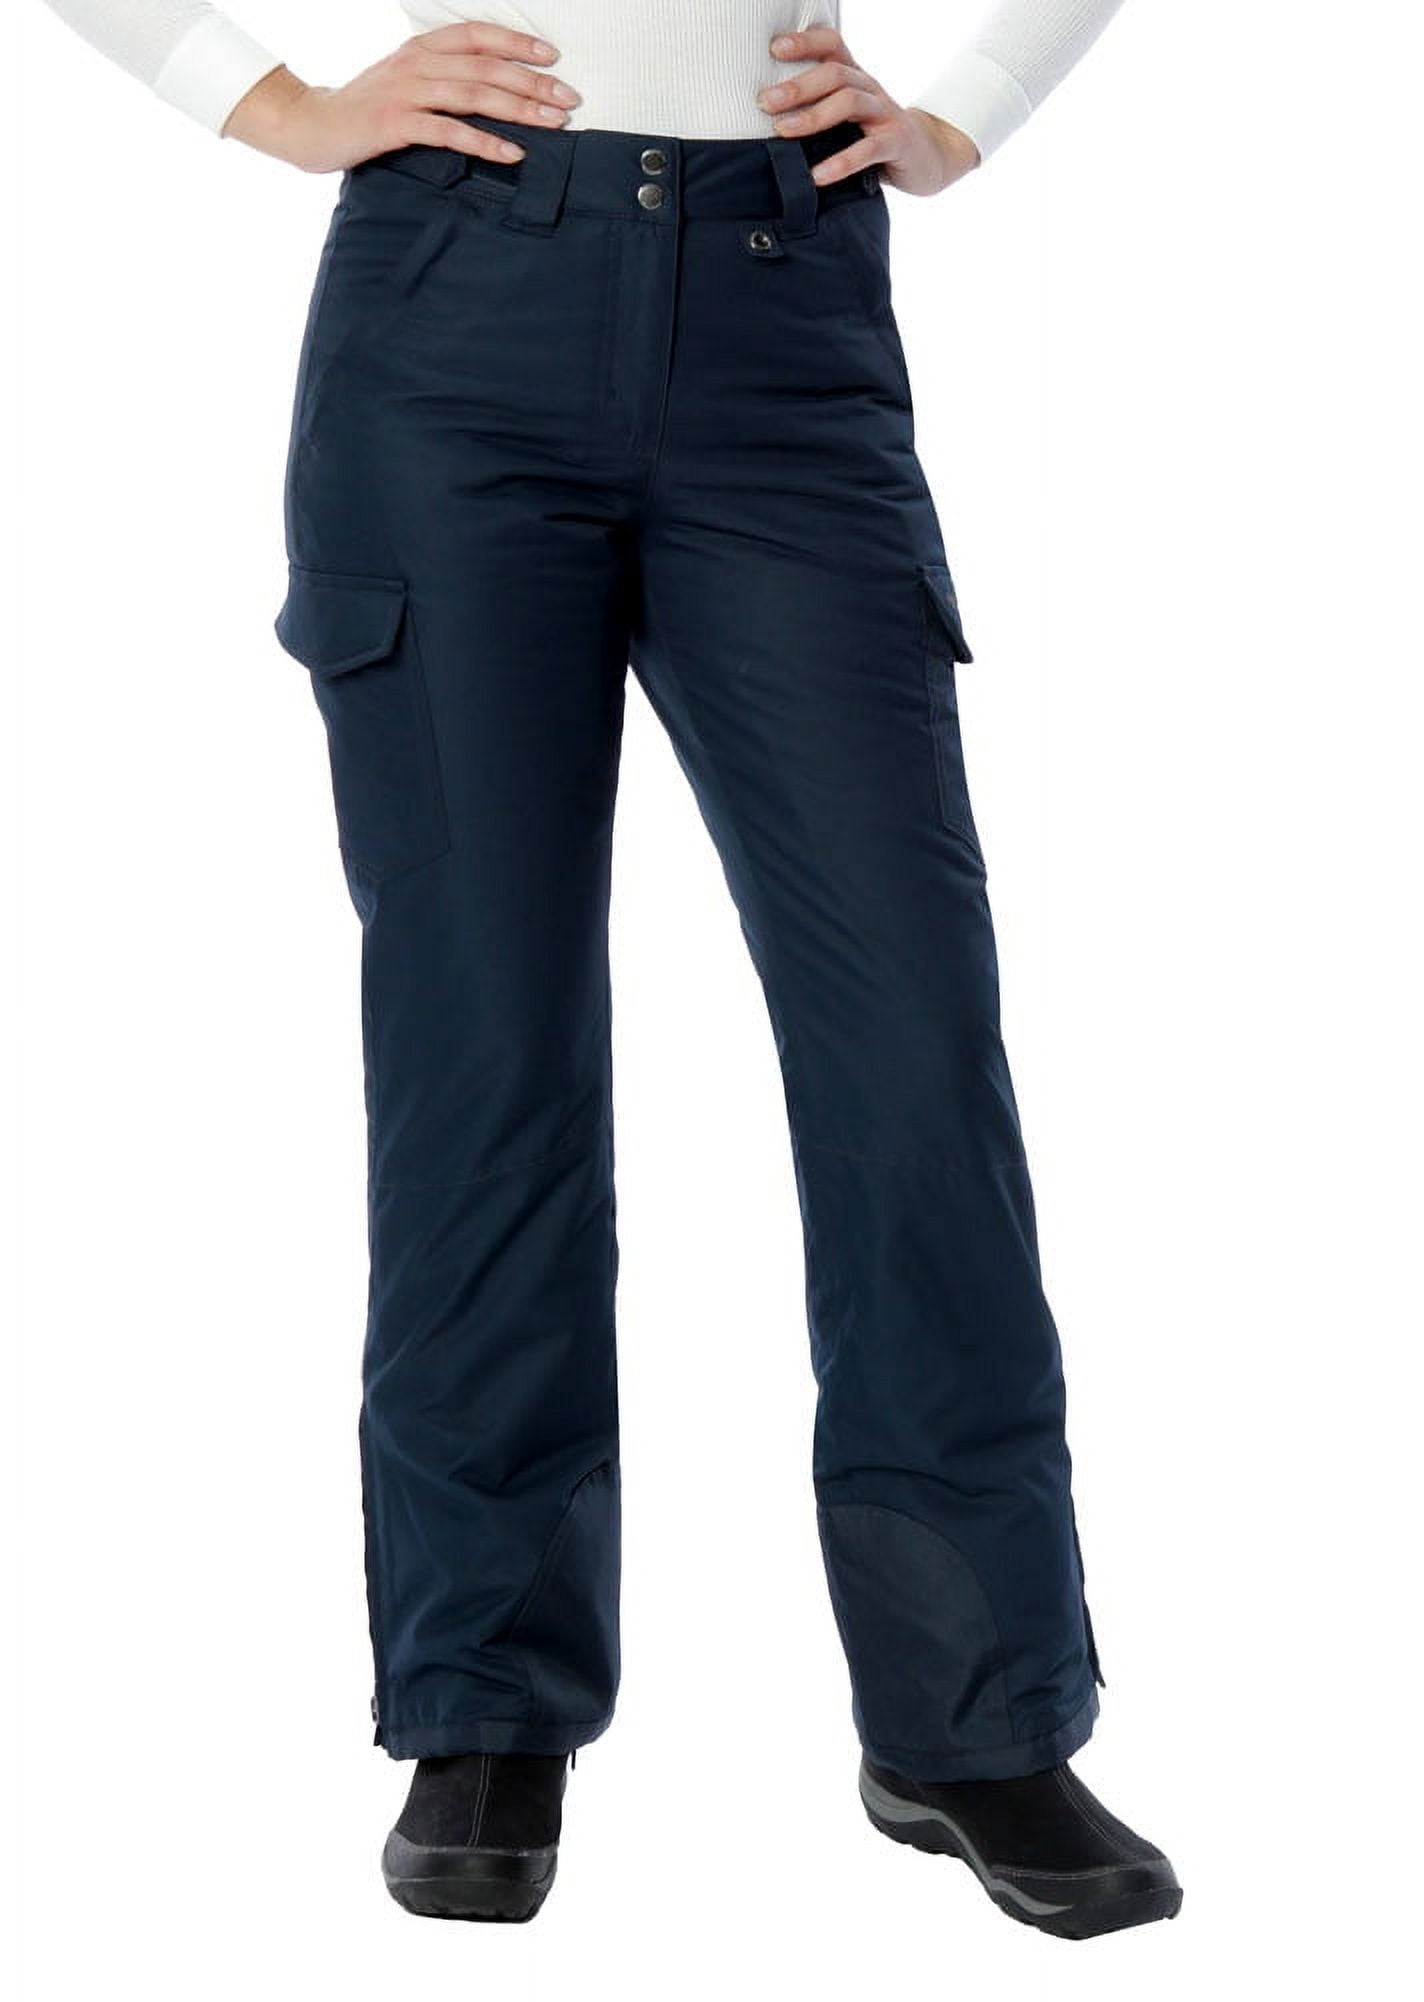 Arctix Women's Insulated Cargo Snowsports Pants, Pink, Xsmall 